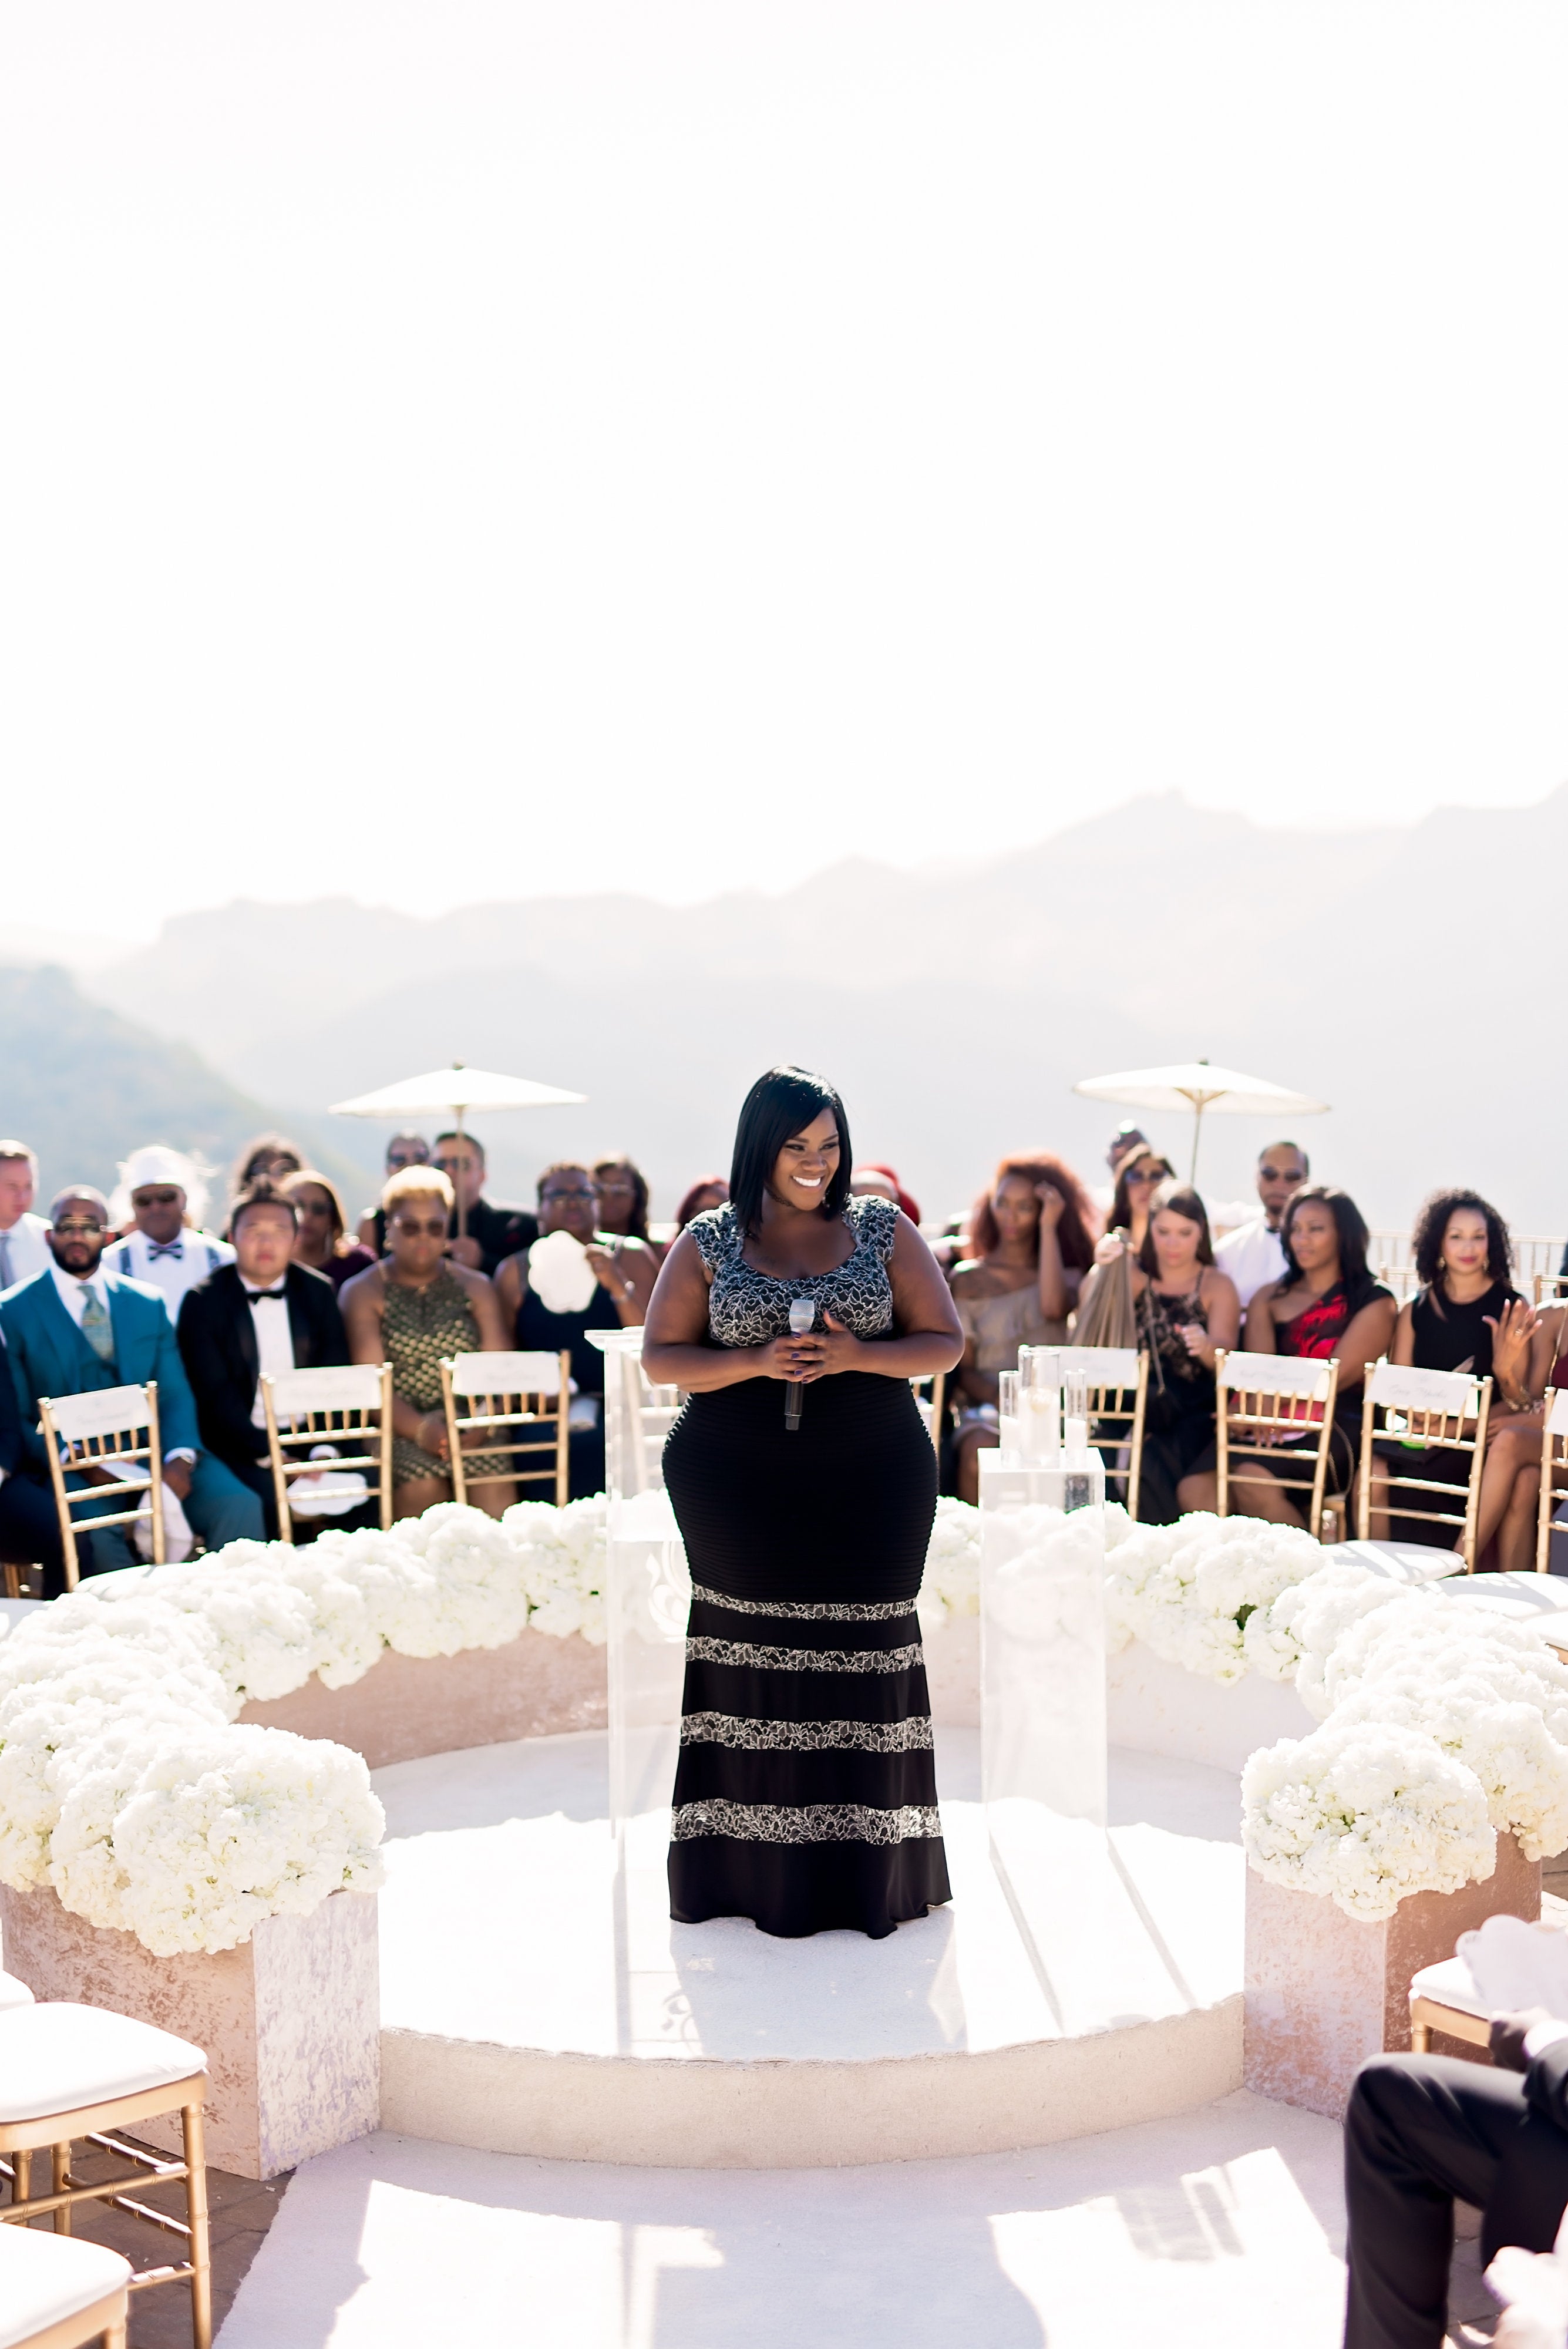 Judge Mathis' Daughter Camara's Malibu Wedding Will Simply Take Your Breath Away
